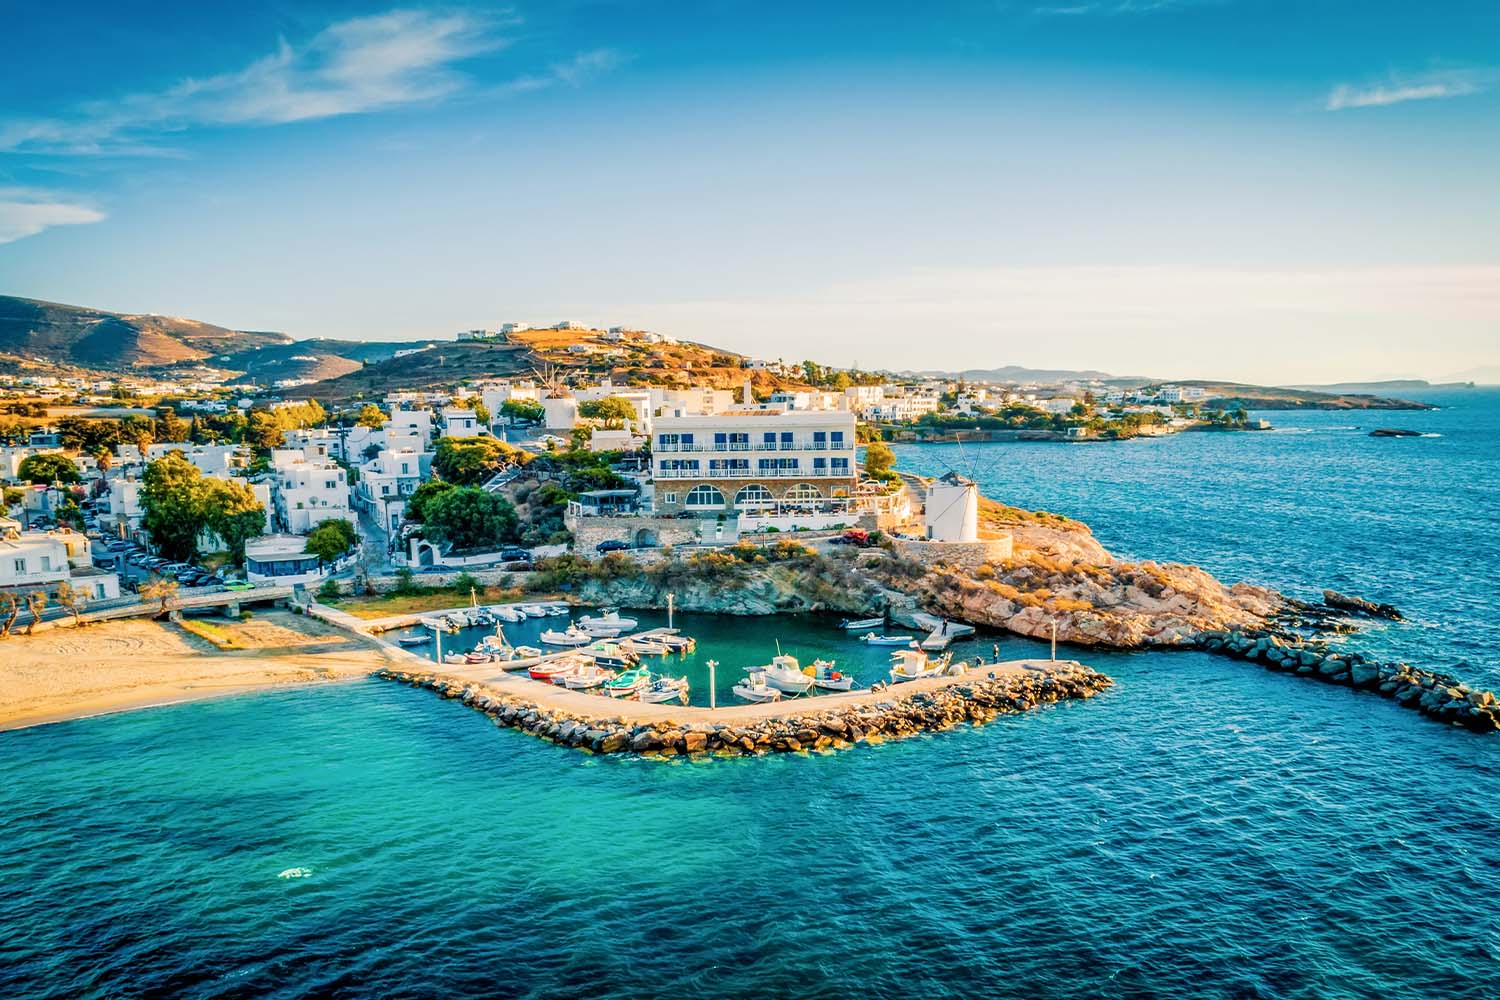 TikTok thinks you should travel to Paros instead of Santorini this year